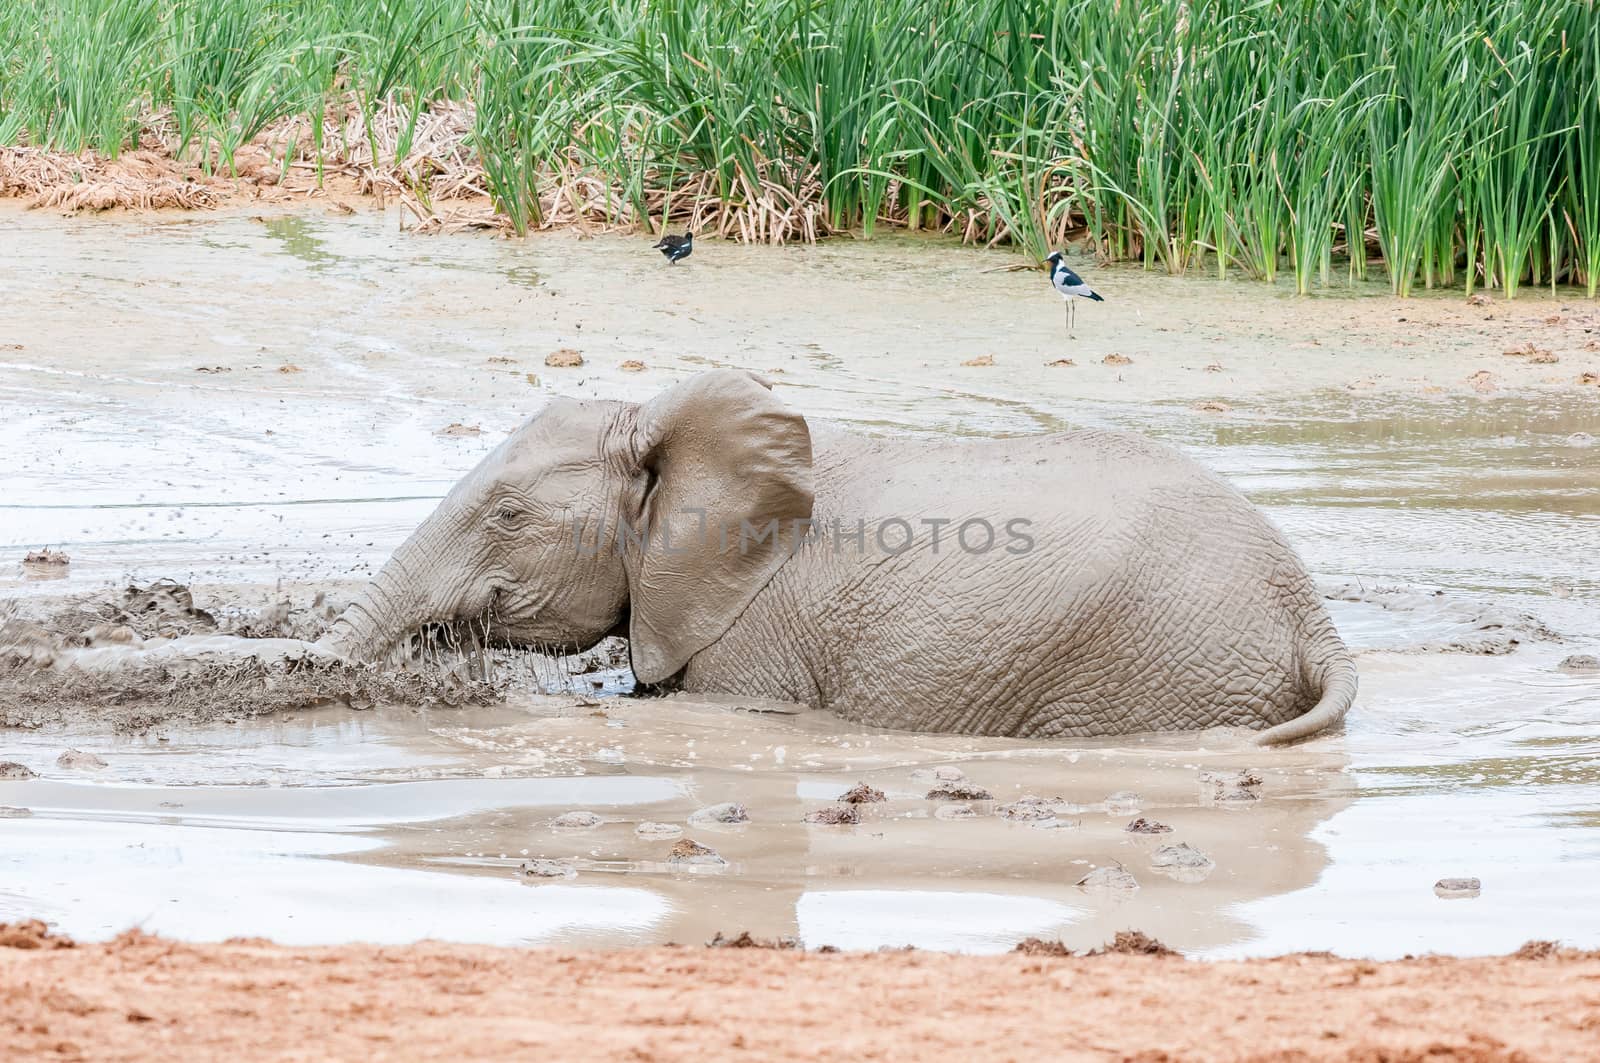 Elephant calf playing in a muddy waterhole by dpreezg